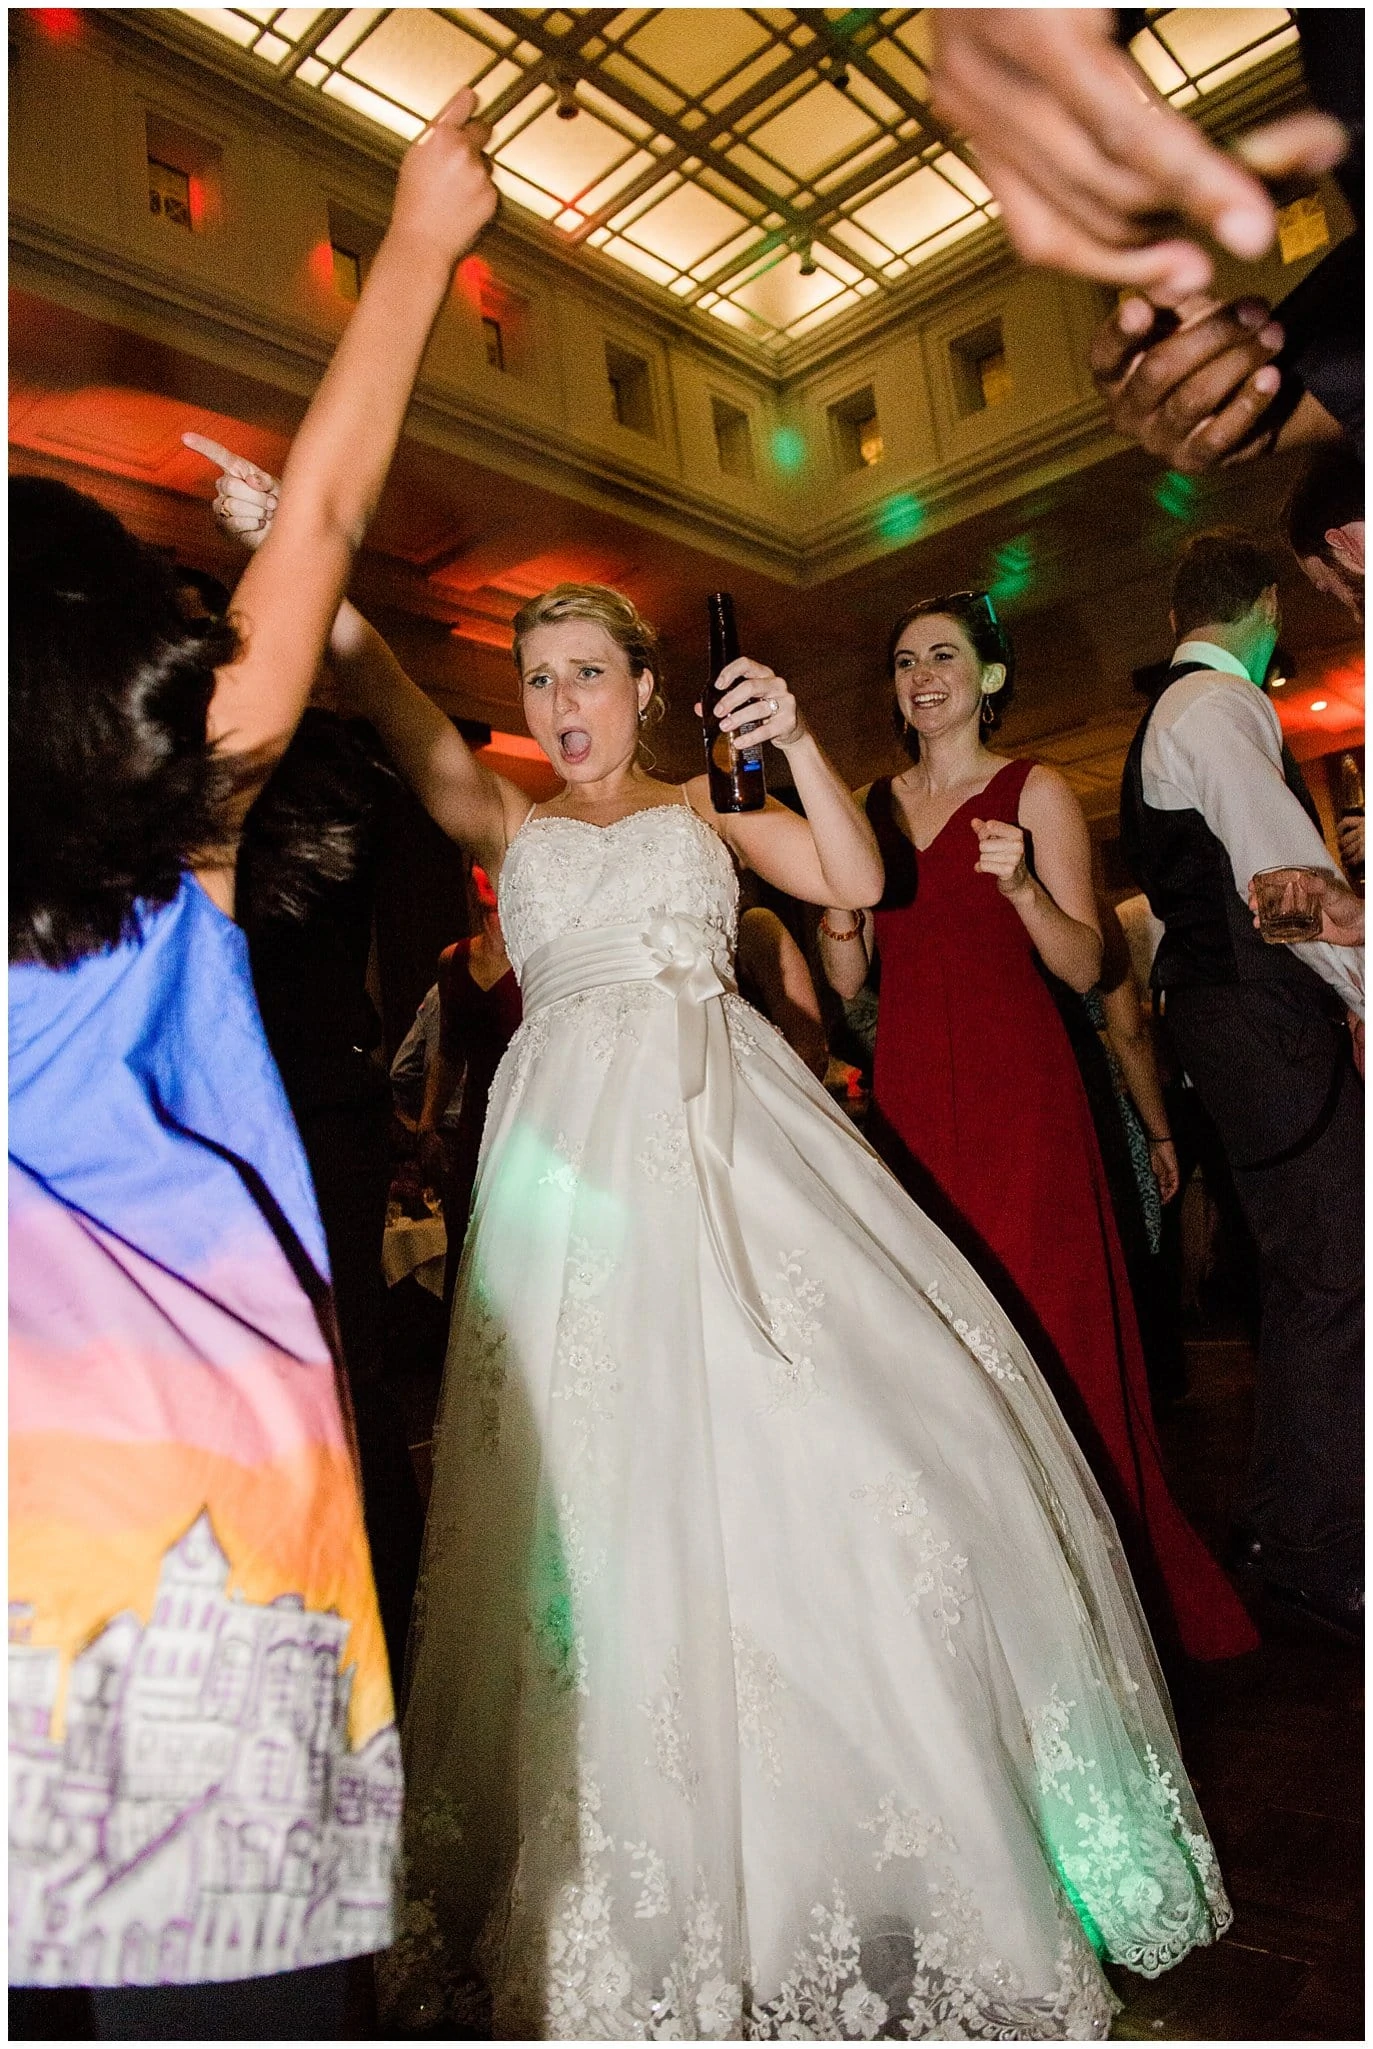 bride dancing at reception at Denver Magnolia Hotel wedding reception by Denver wedding photographer Jennie Crate